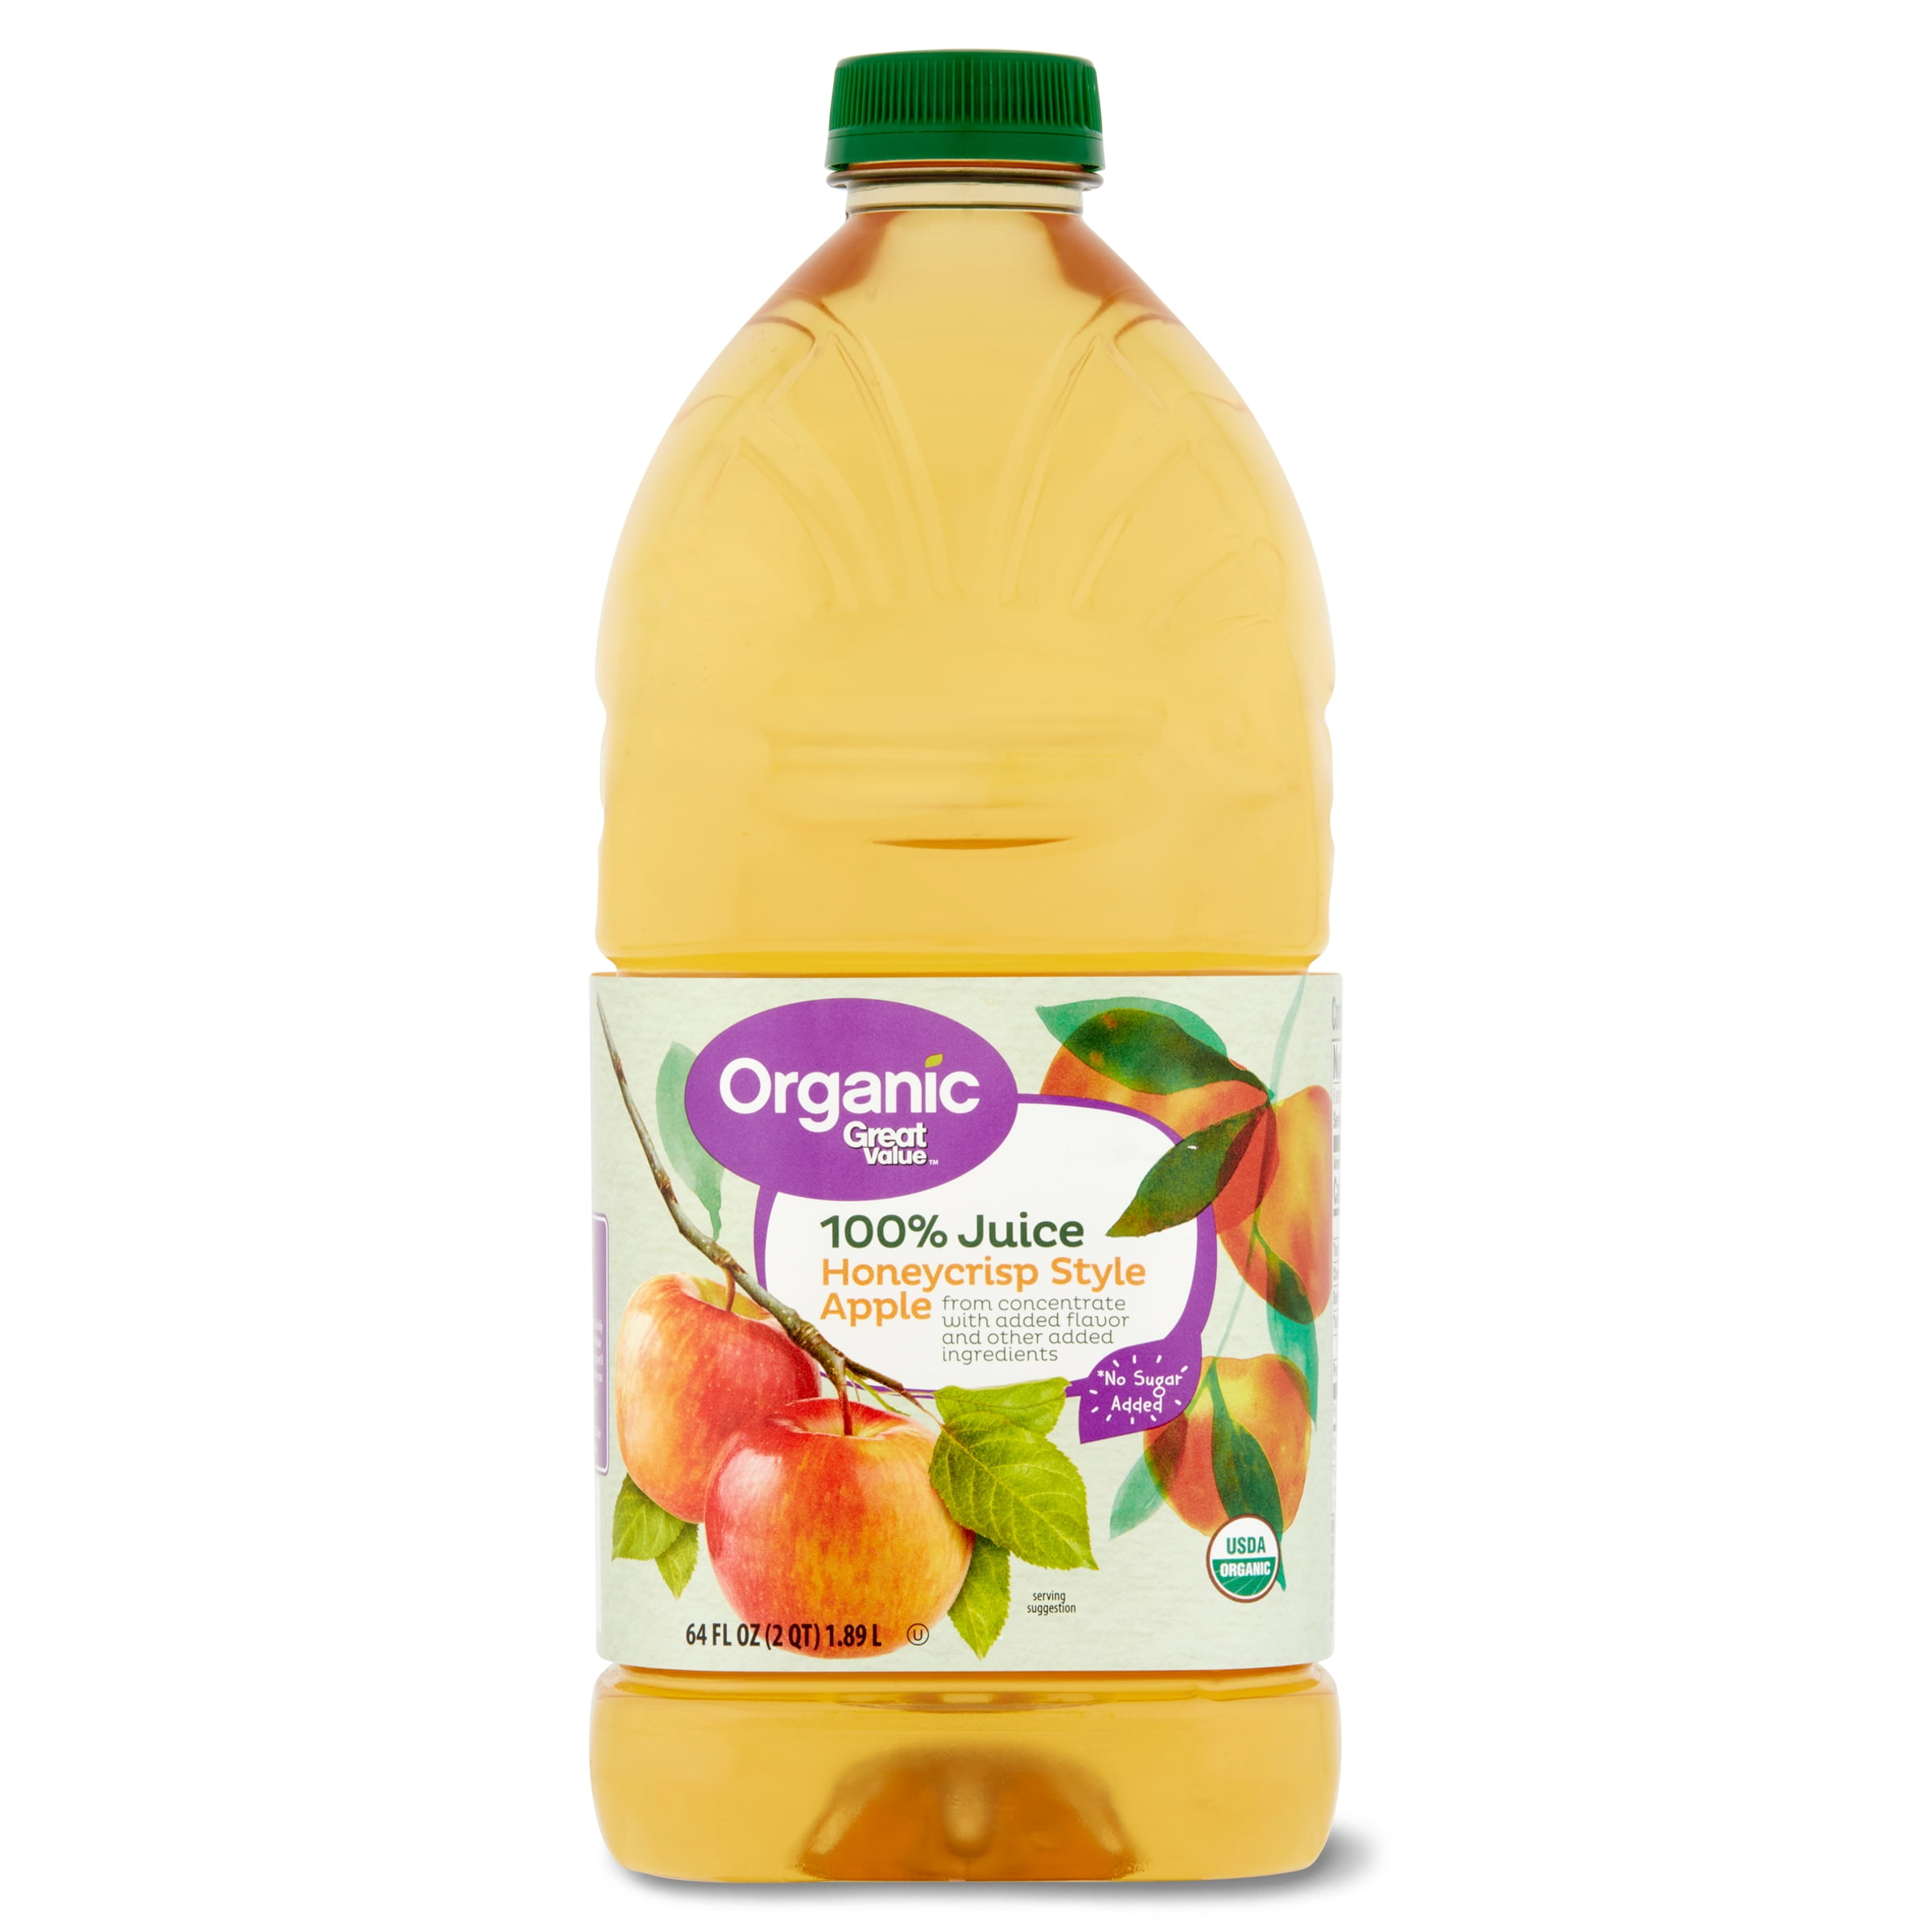 North Coast Organic Honeycrisp Apple Juice